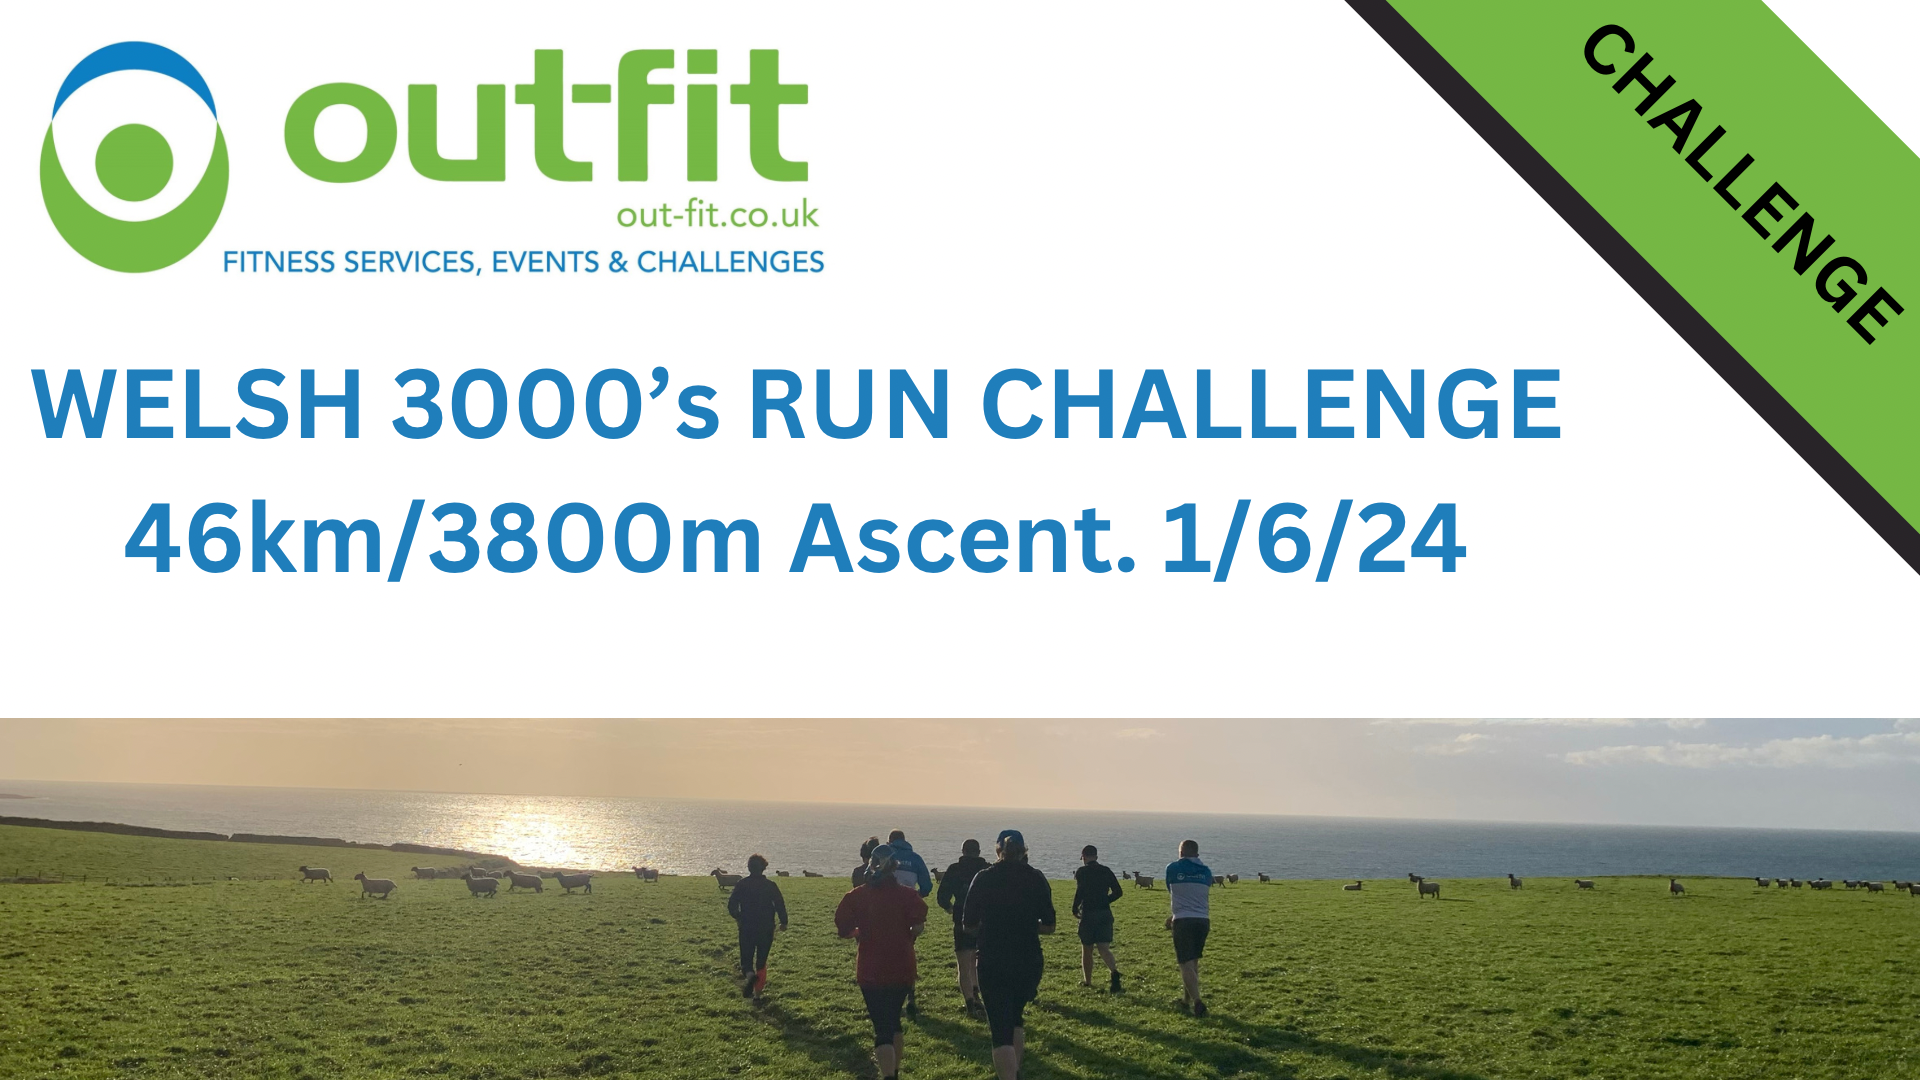 The Welsh 3000's Run Challenge 